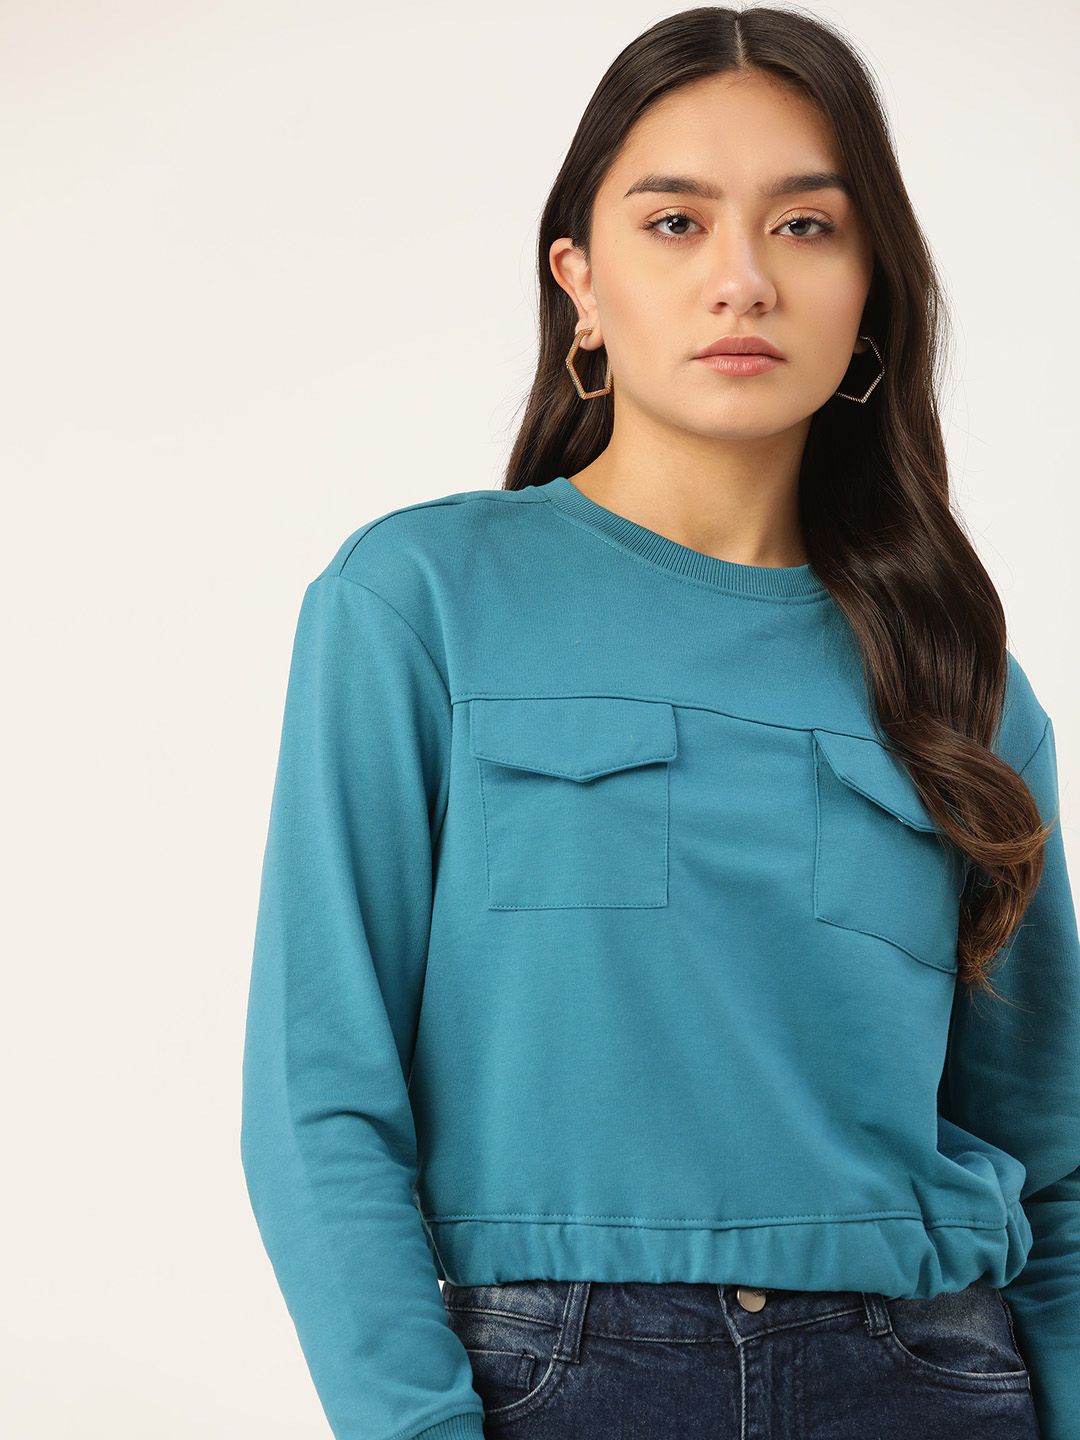 DressBerry Women Teal Blue Solid Sweatshirt Price in India